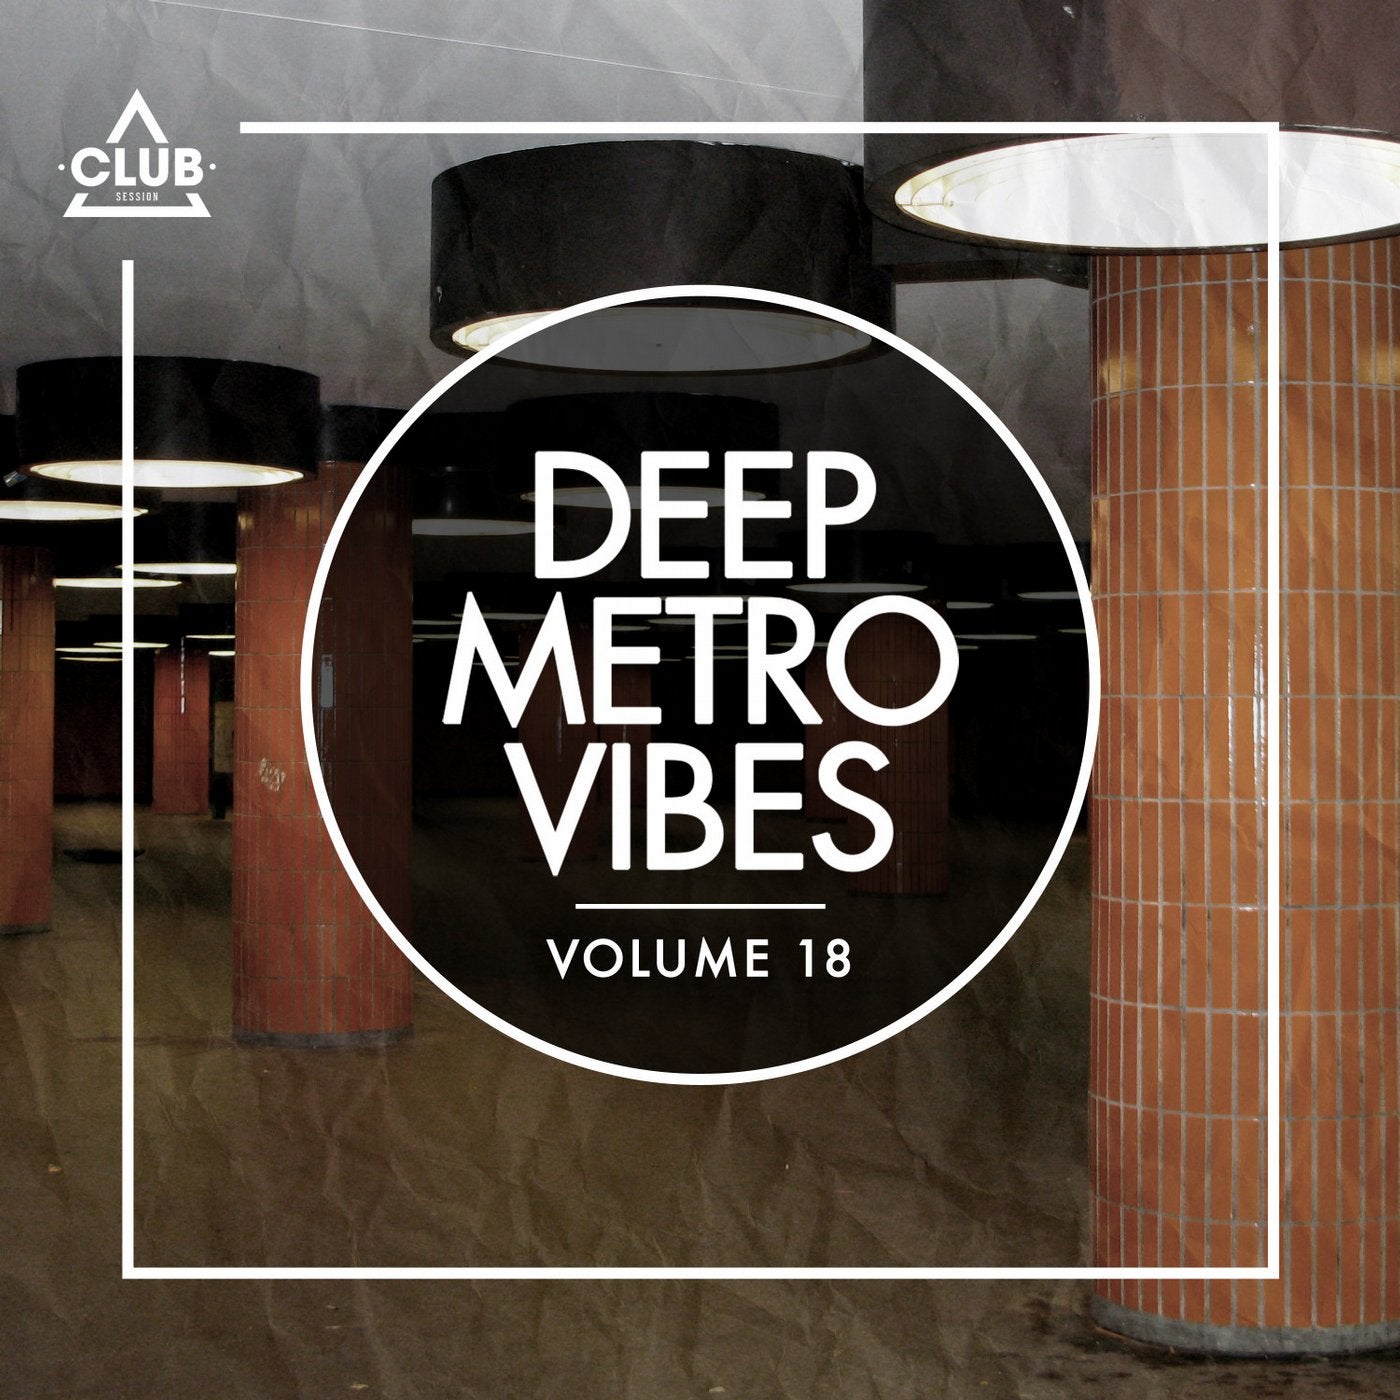 Deep Metro Vibes Vol. 18